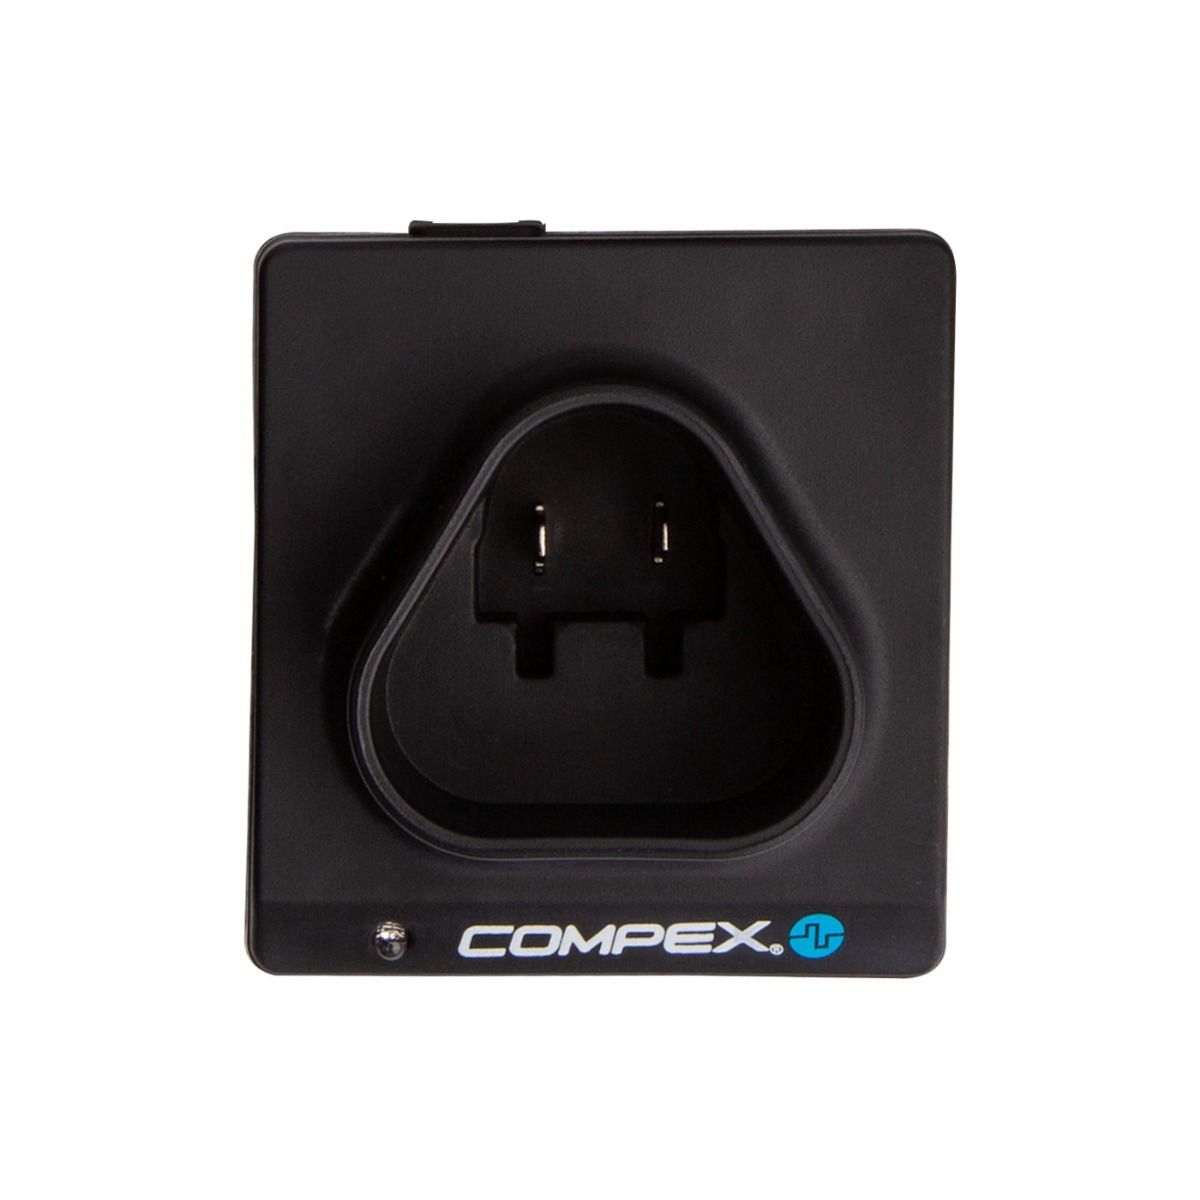  COMPEX FIXX™ 1.0 ŞARJ YUVASI